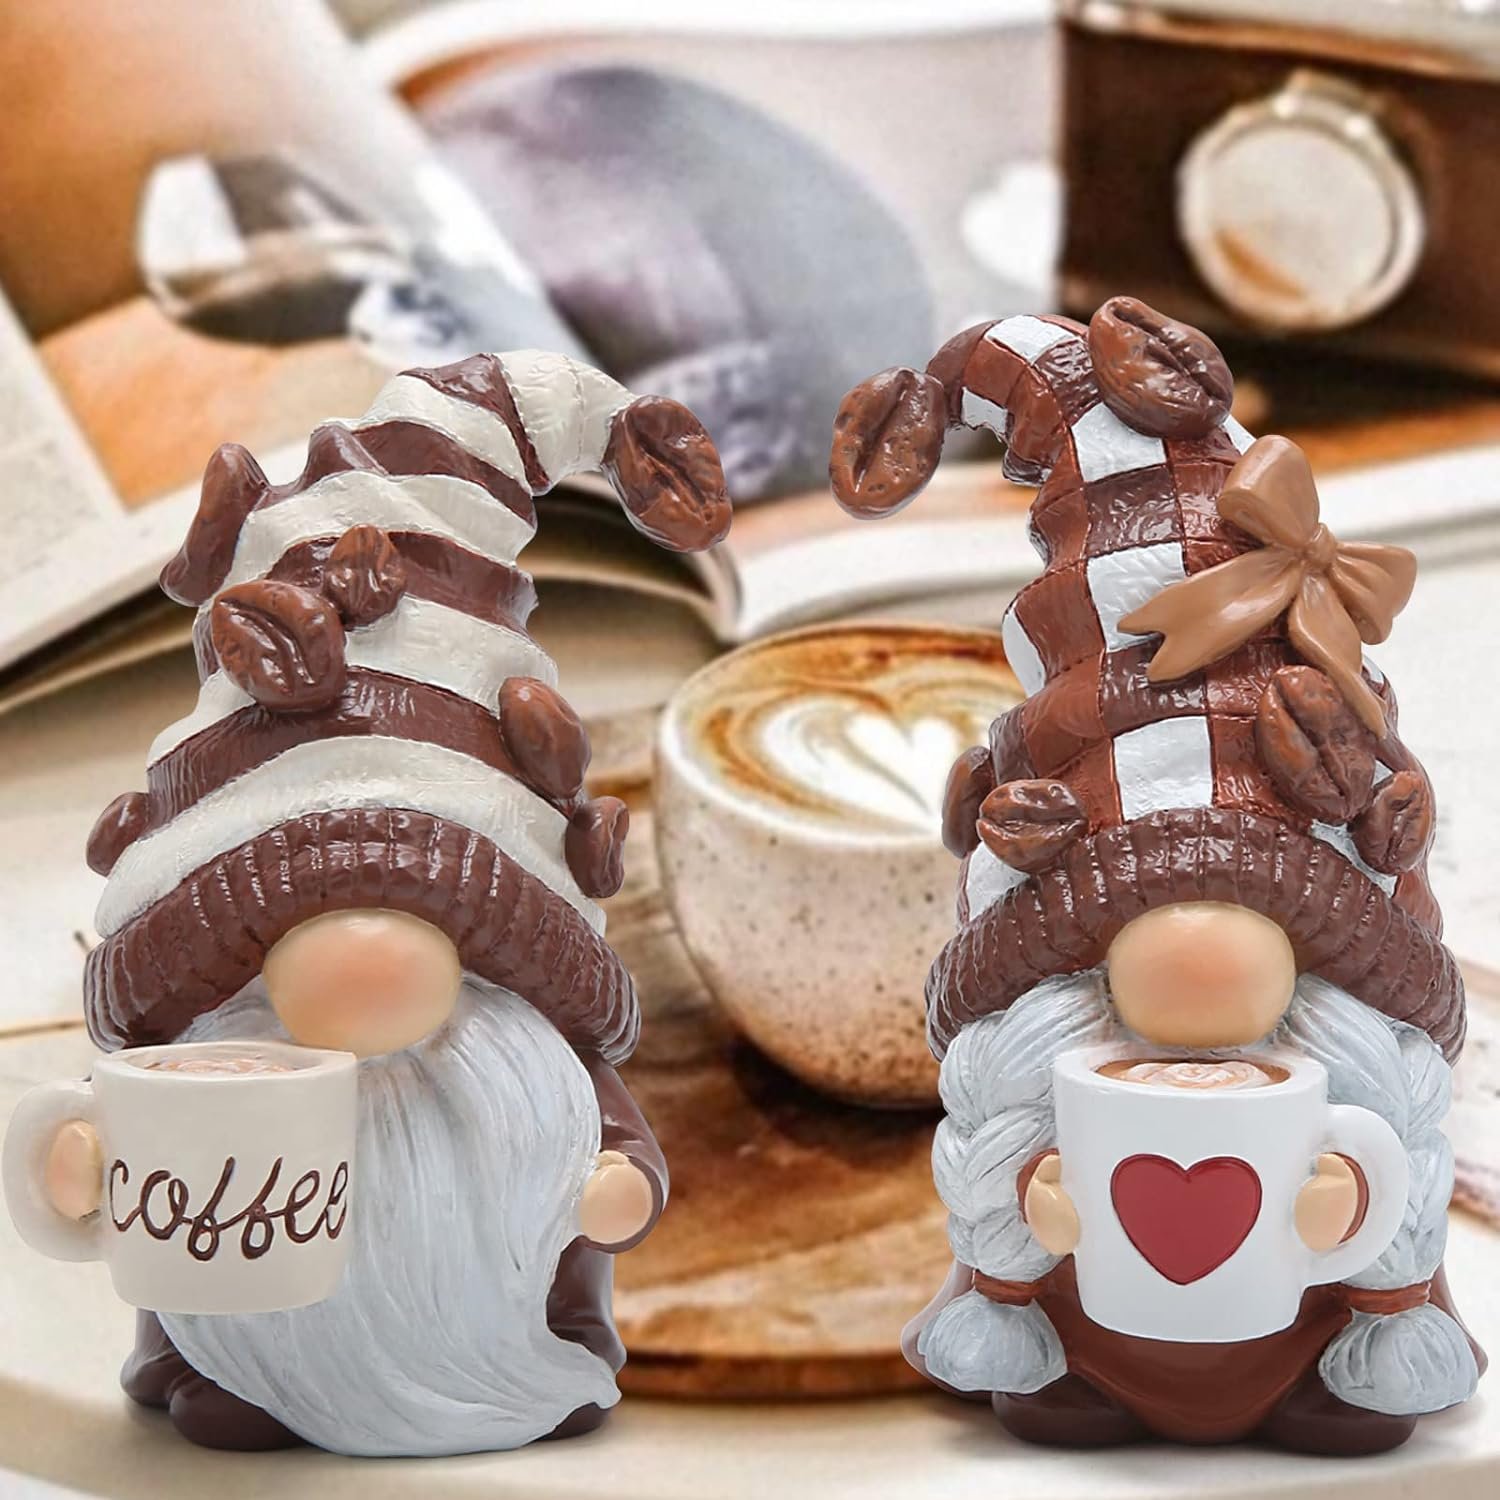 hodao 2pcs coffee gnomes figurines swedish tomte elf dwarf decor for bar home gifts 2